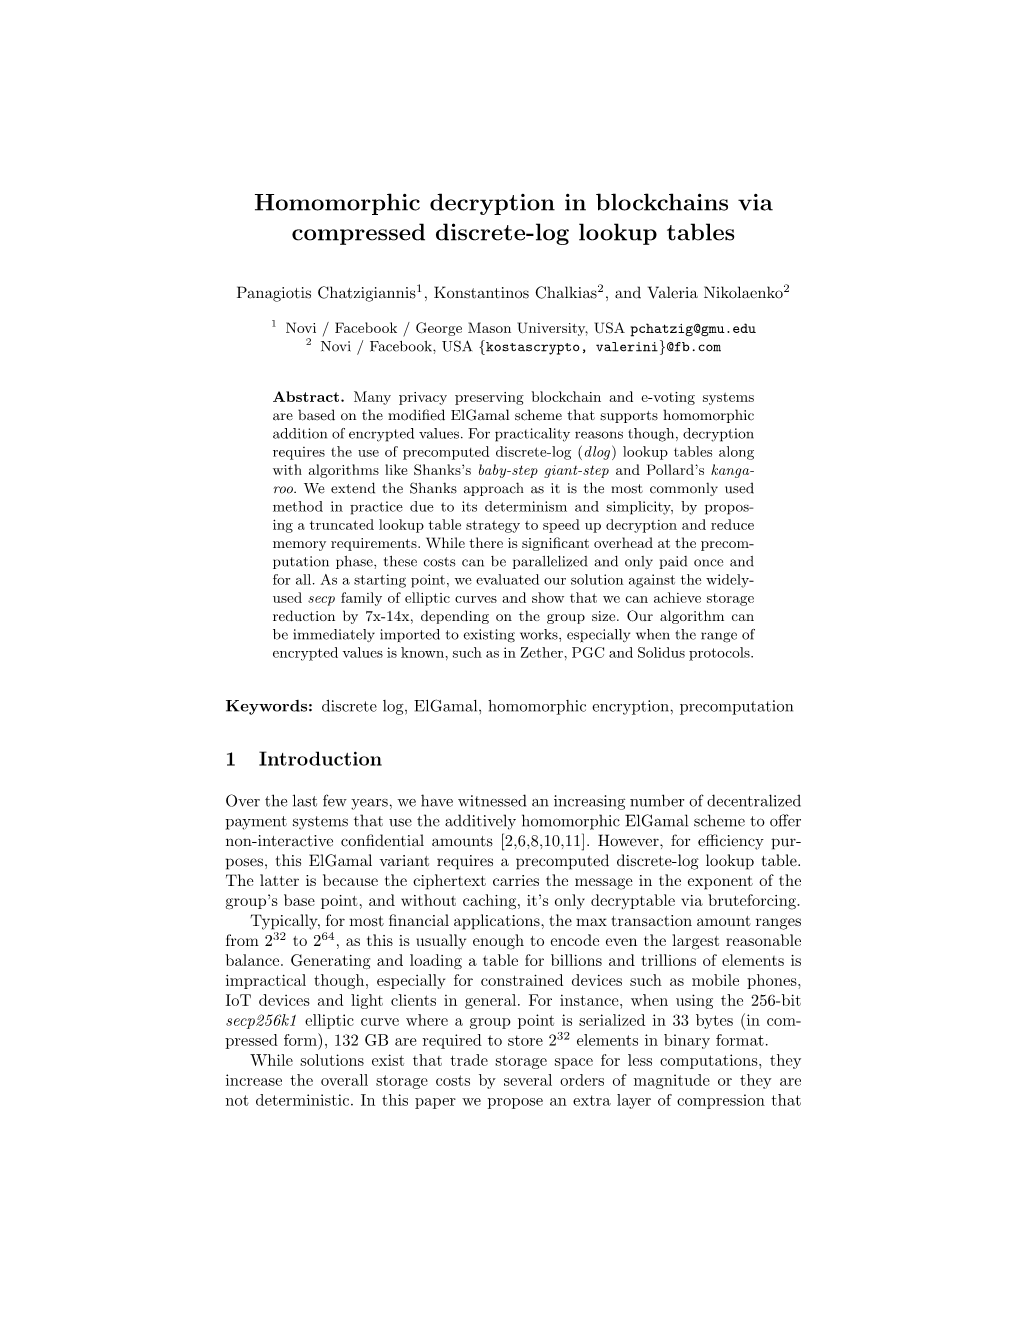 Homomorphic Decryption in Blockchains Via Compressed Discrete-Log Lookup Tables